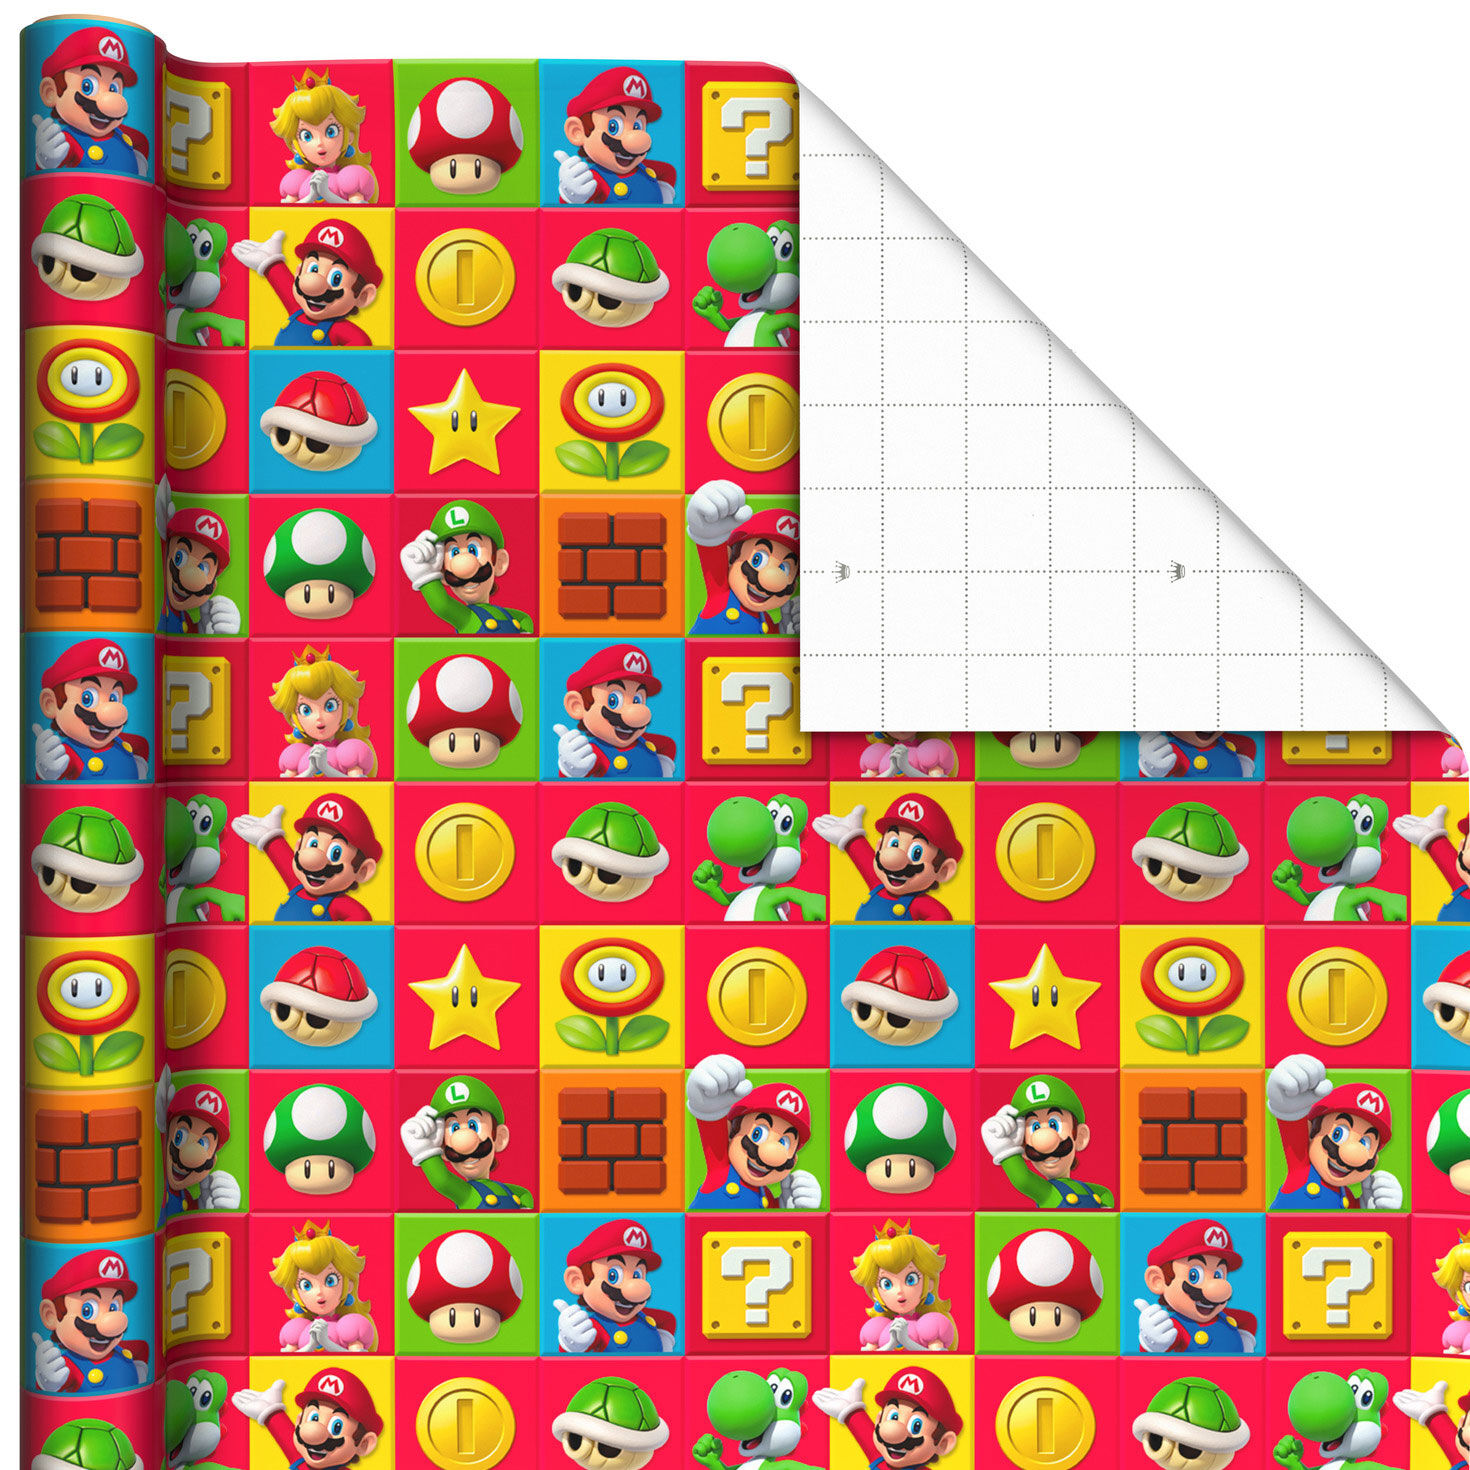 https://www.hallmark.com/dw/image/v2/AALB_PRD/on/demandware.static/-/Sites-hallmark-master/default/dw690a5f11/images/finished-goods/products/499EJR6400/Super-Mario-on-Colorful-Squares-Wrapping-Paper_499EJR6400_01.jpg?sfrm=jpg